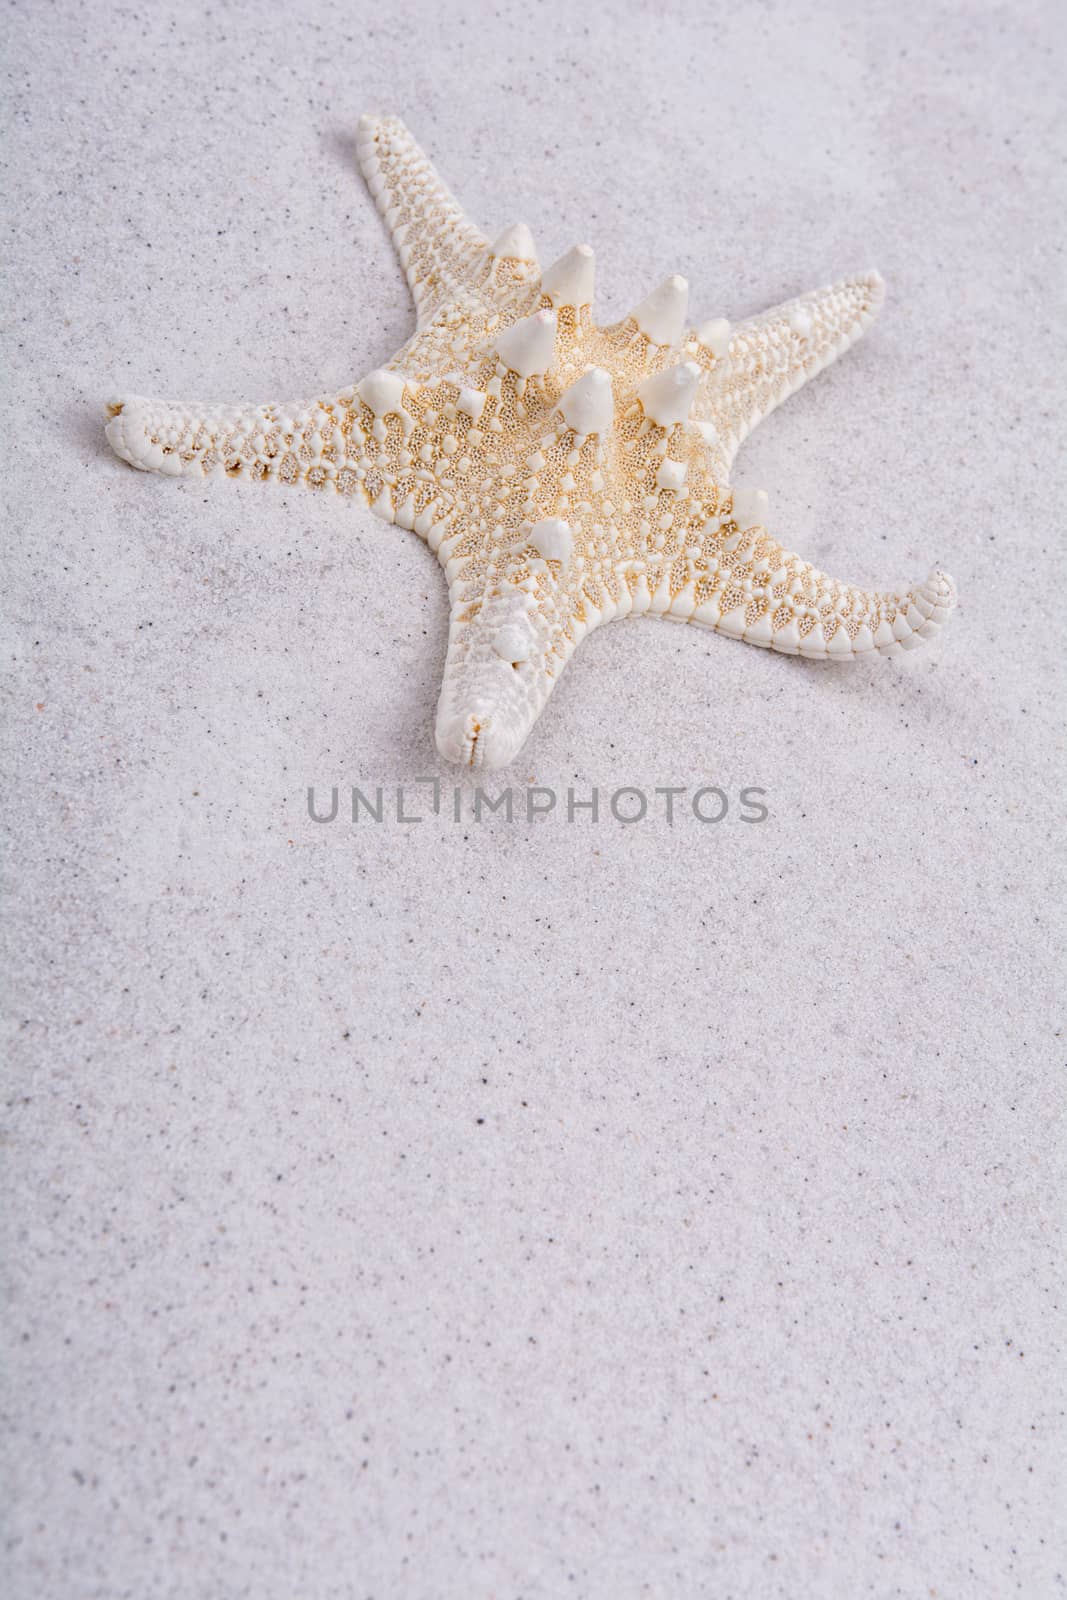 White starfish on a grey sand background